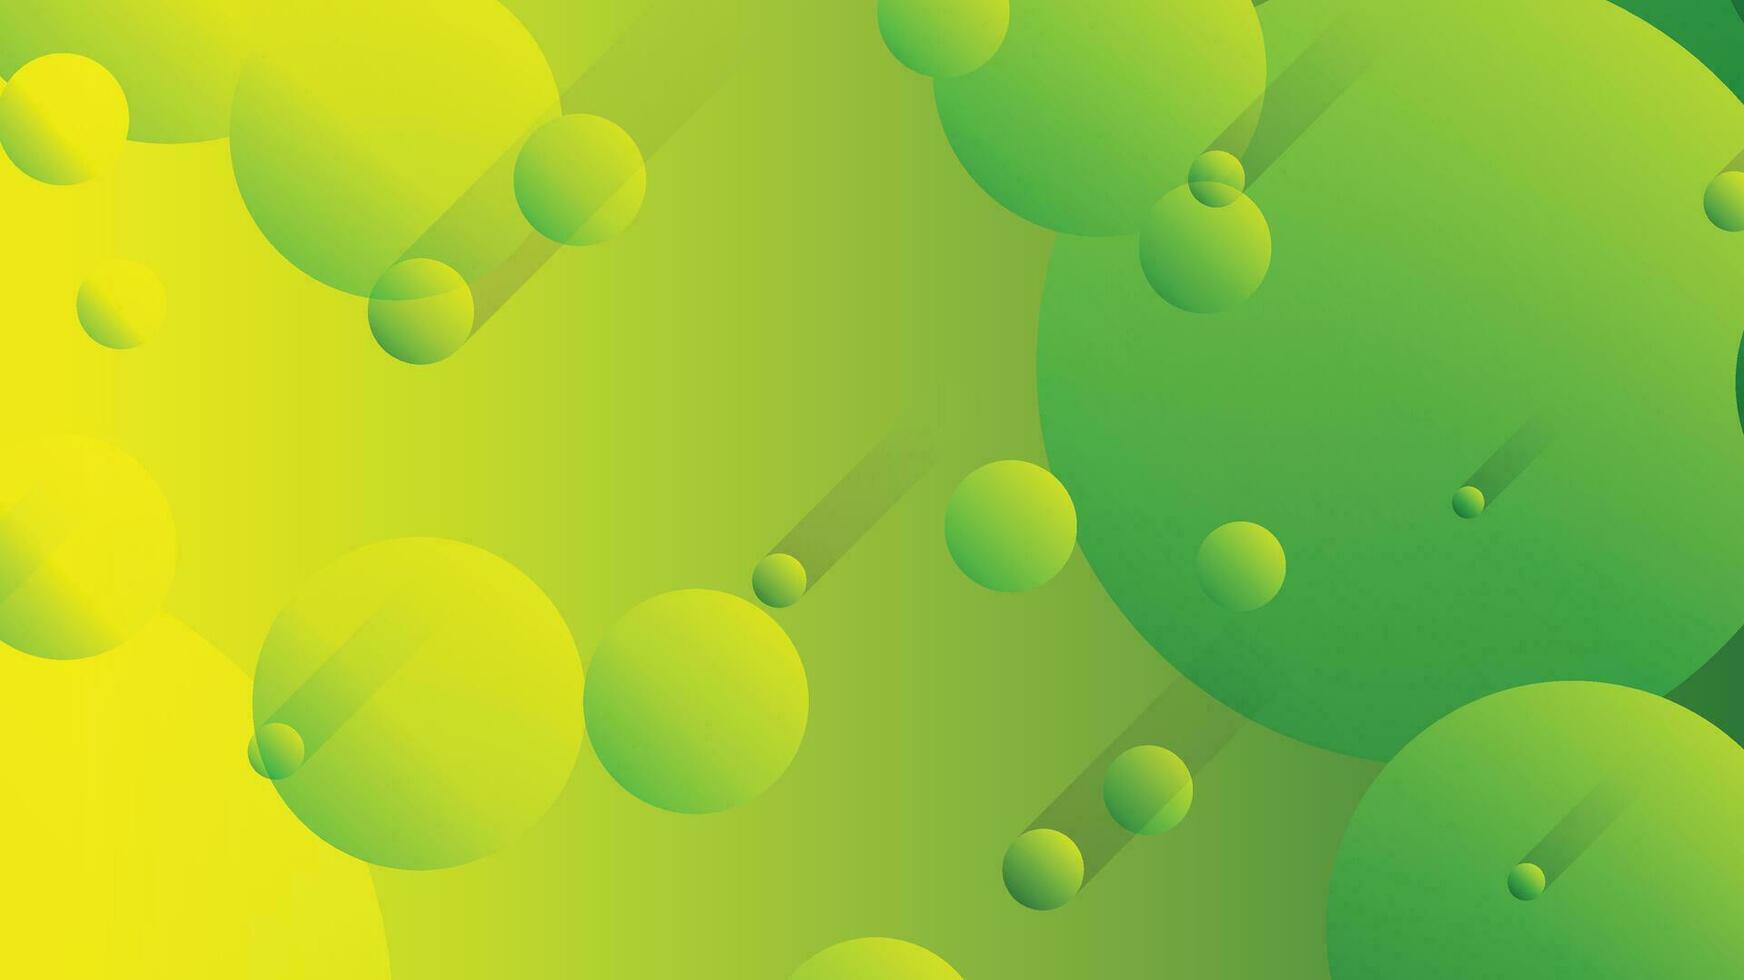 verde e amarelo abstrato círculo gradiente moderno gráfico fundo vetor